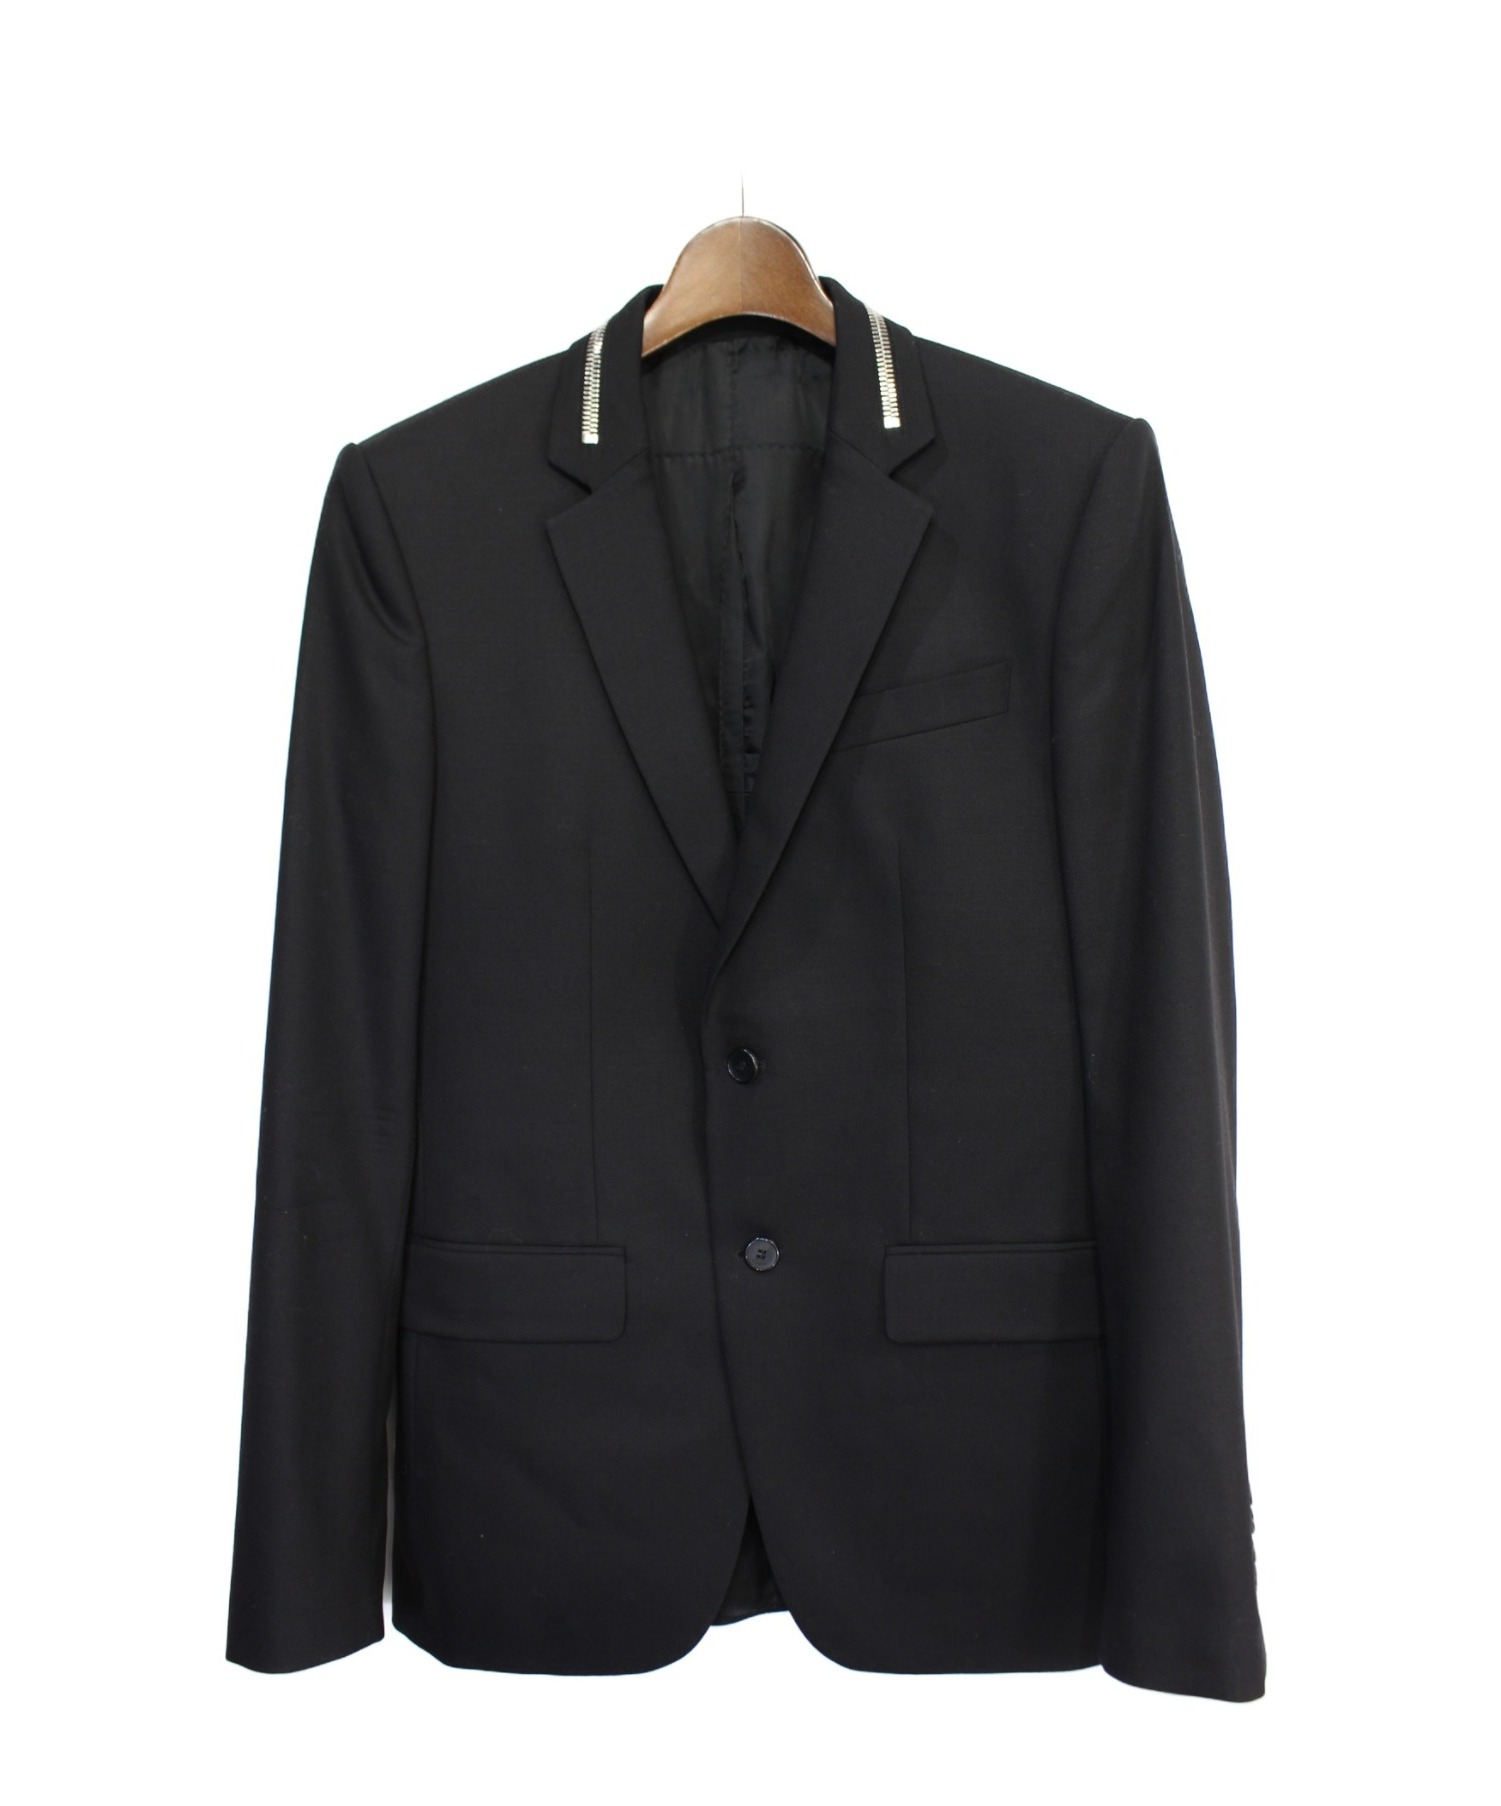 GIVENCHY (ジバンシィ) 襟ジップテーラードジャケット ブラック サイズ:46